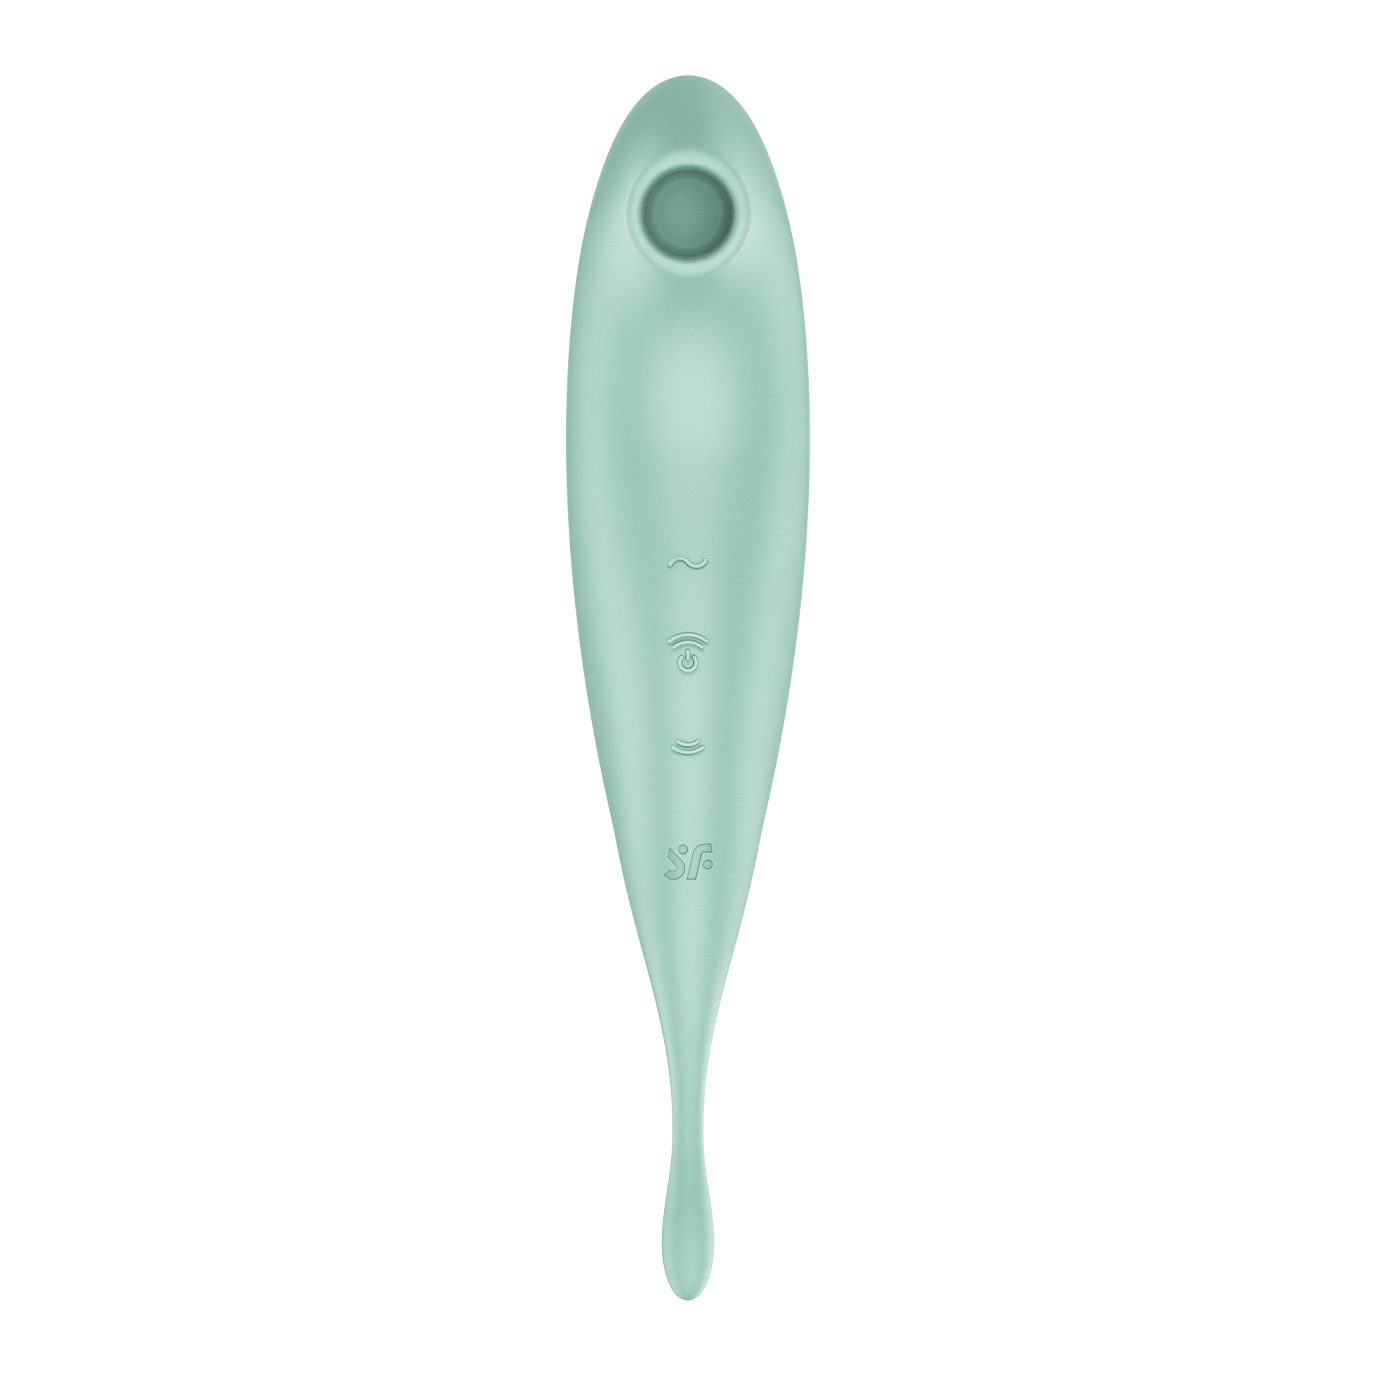 Pro Satisfyer Auflegevibrator, (1-tlg) Connect & Mint Klitoris-Stimulator Satisfyer App"; "Twirling Druckwellen-